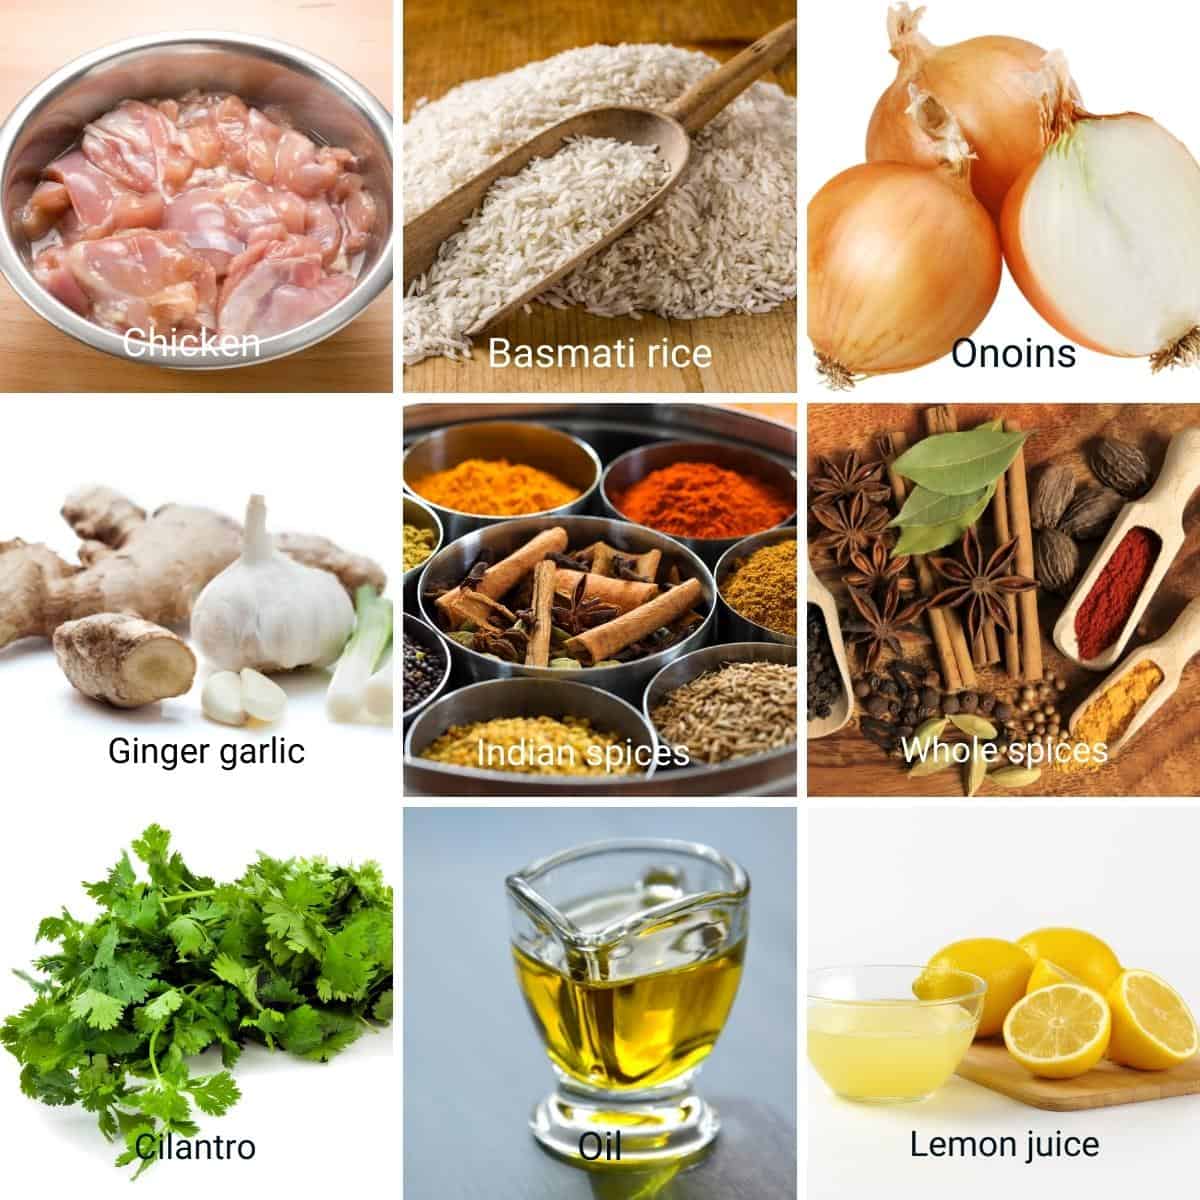 Ingredients for chicken biryani.